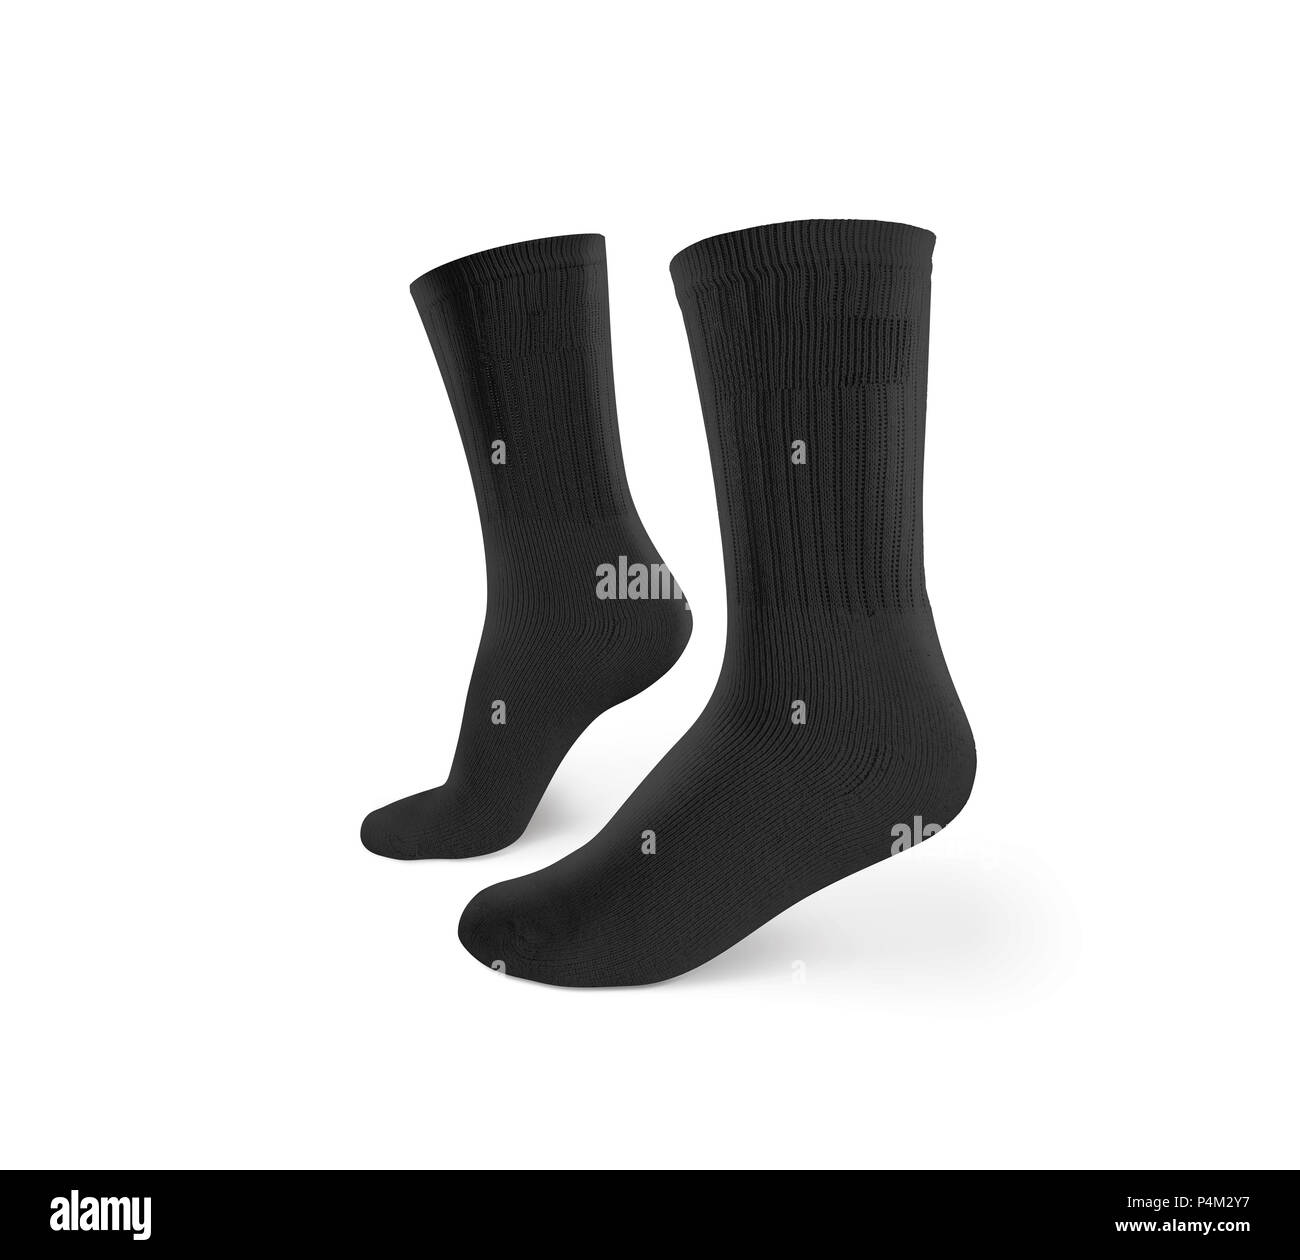 Maqueta realista de par de calcetines negros